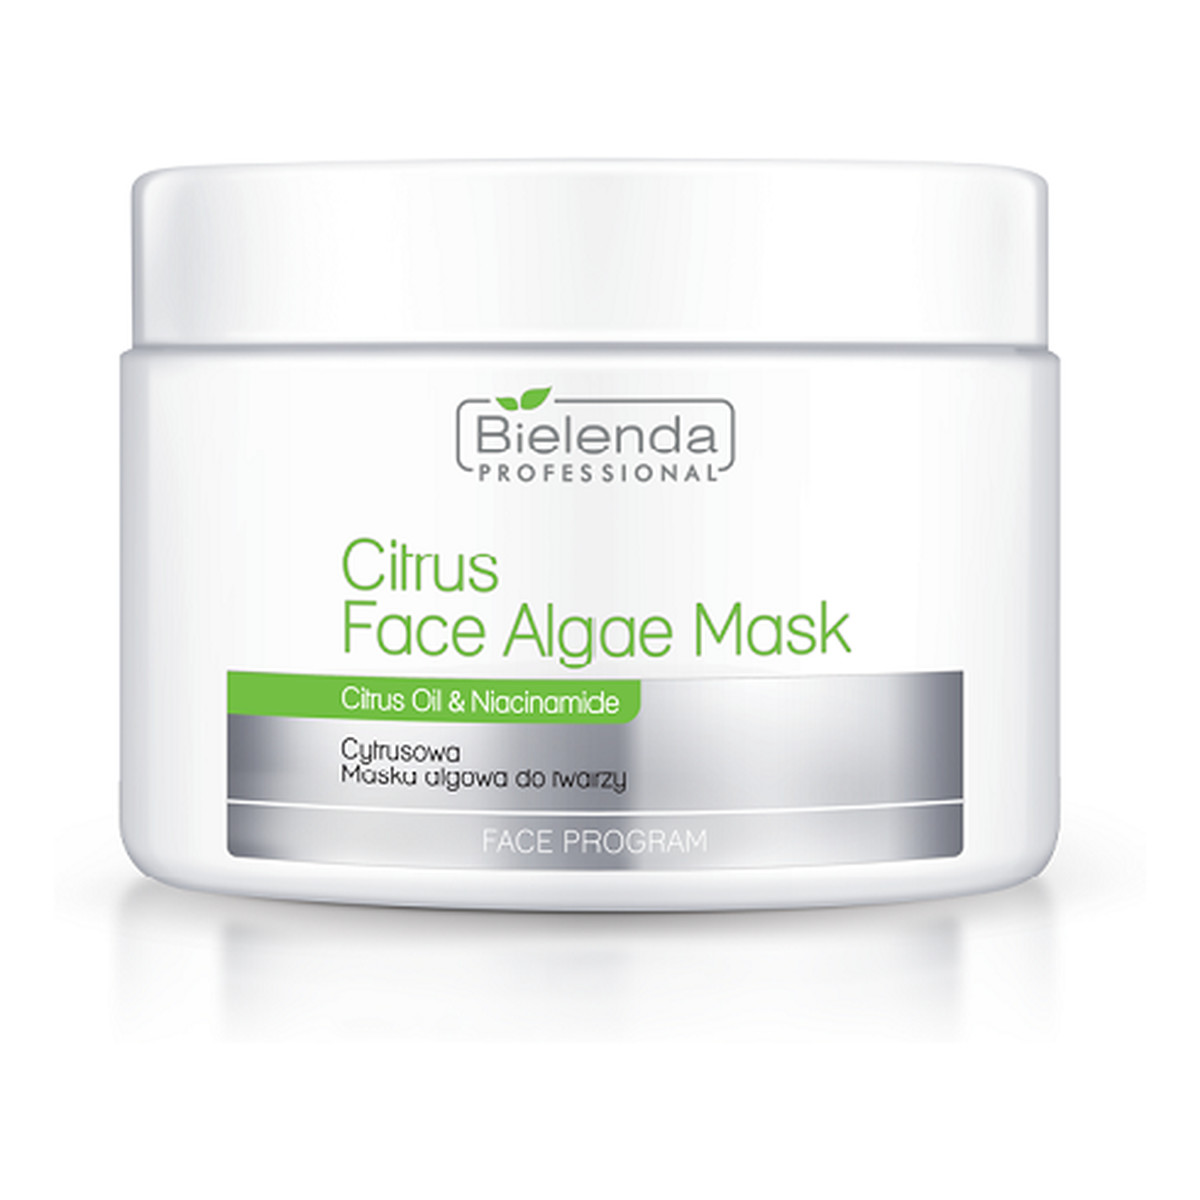 Bielenda Professional Citrus Face Algae Mask Maska Algowa Cytrusowa Cera Mieszana Tłusta Trądzikowa 190g